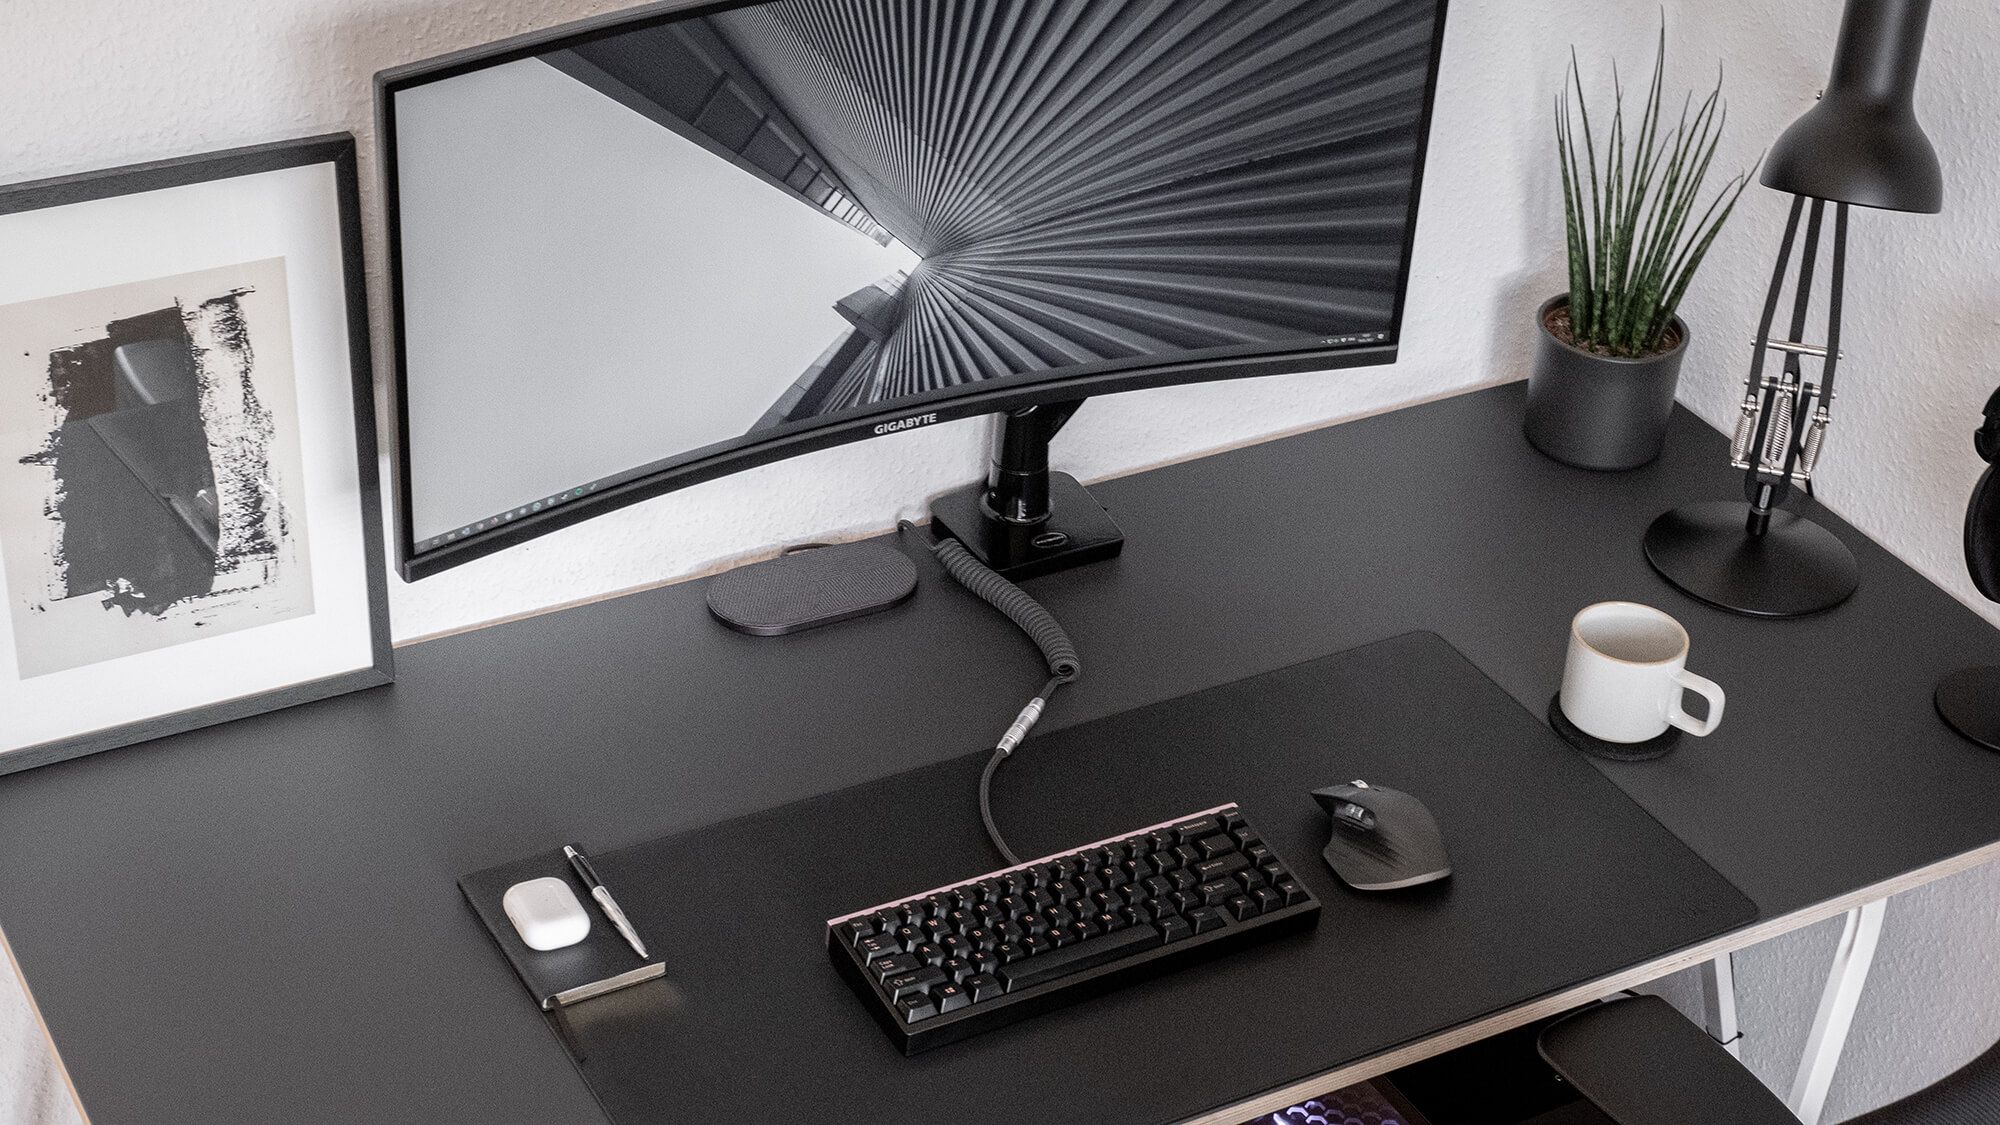 Monochrome desk setup with a Gigabyte monitor